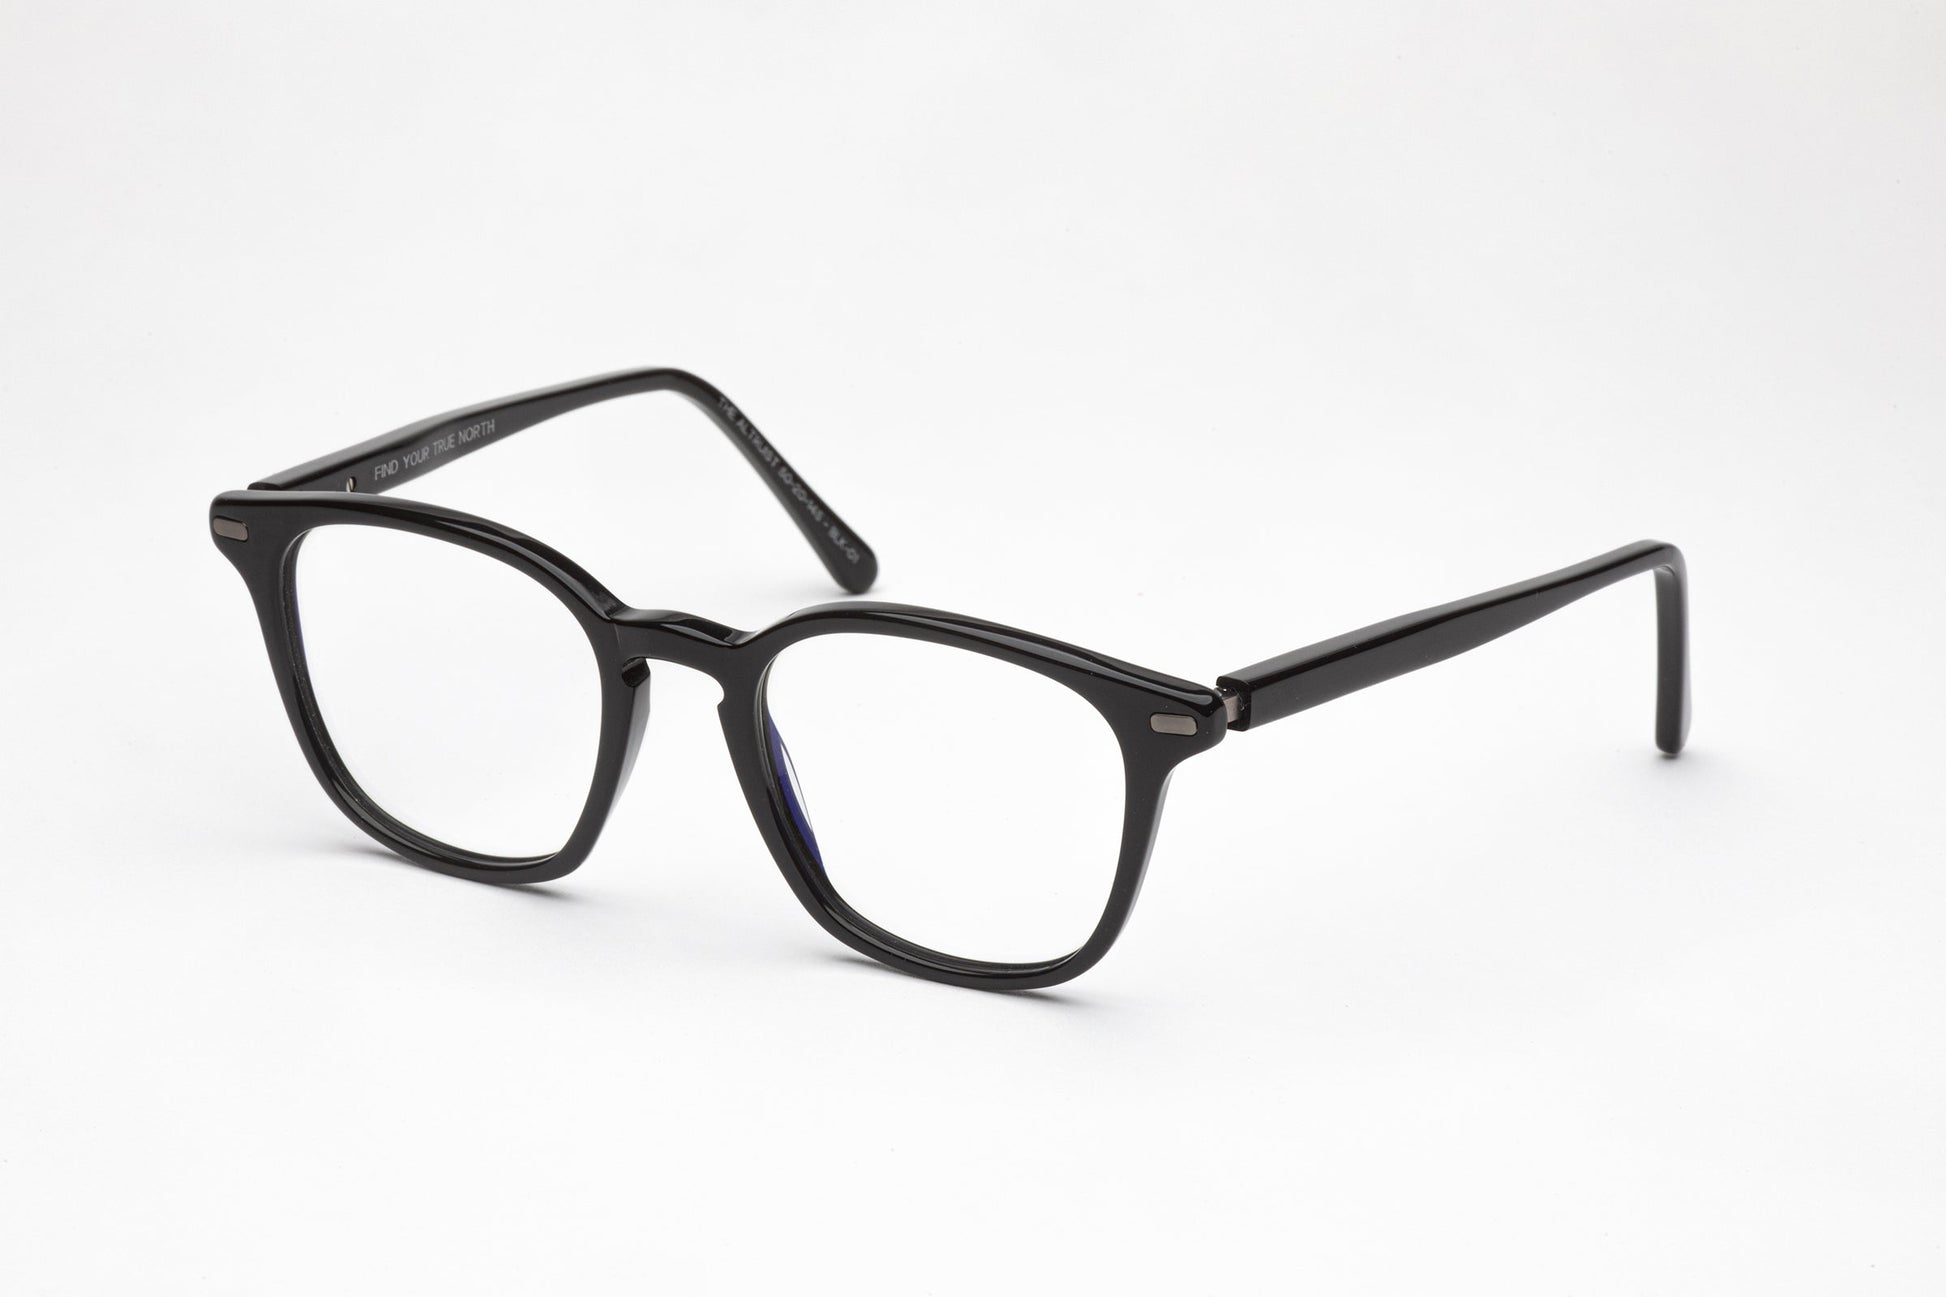 Angled View - The Altruist 2 | Black Square Frame Designer Prescription Glasses with Low Nose Bridge